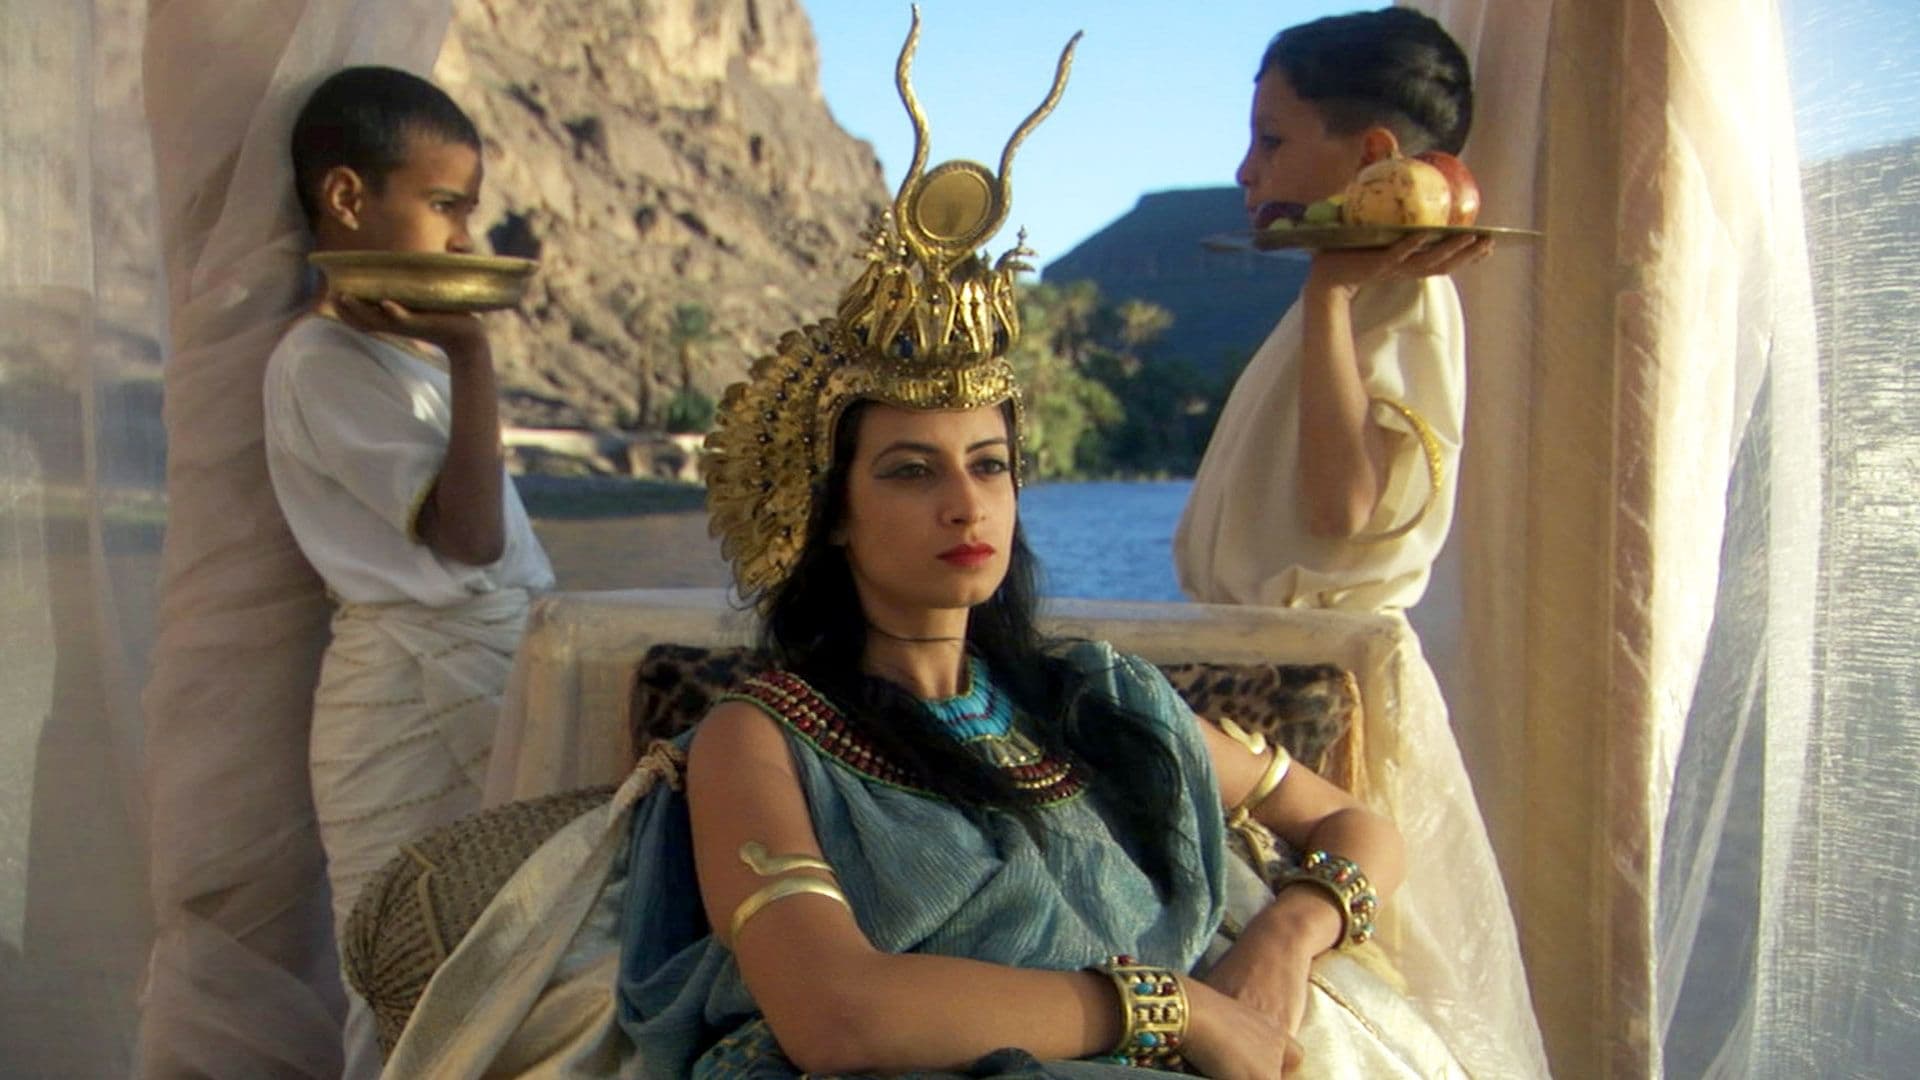 Cleopatra: Portrait of a Killer (2009)